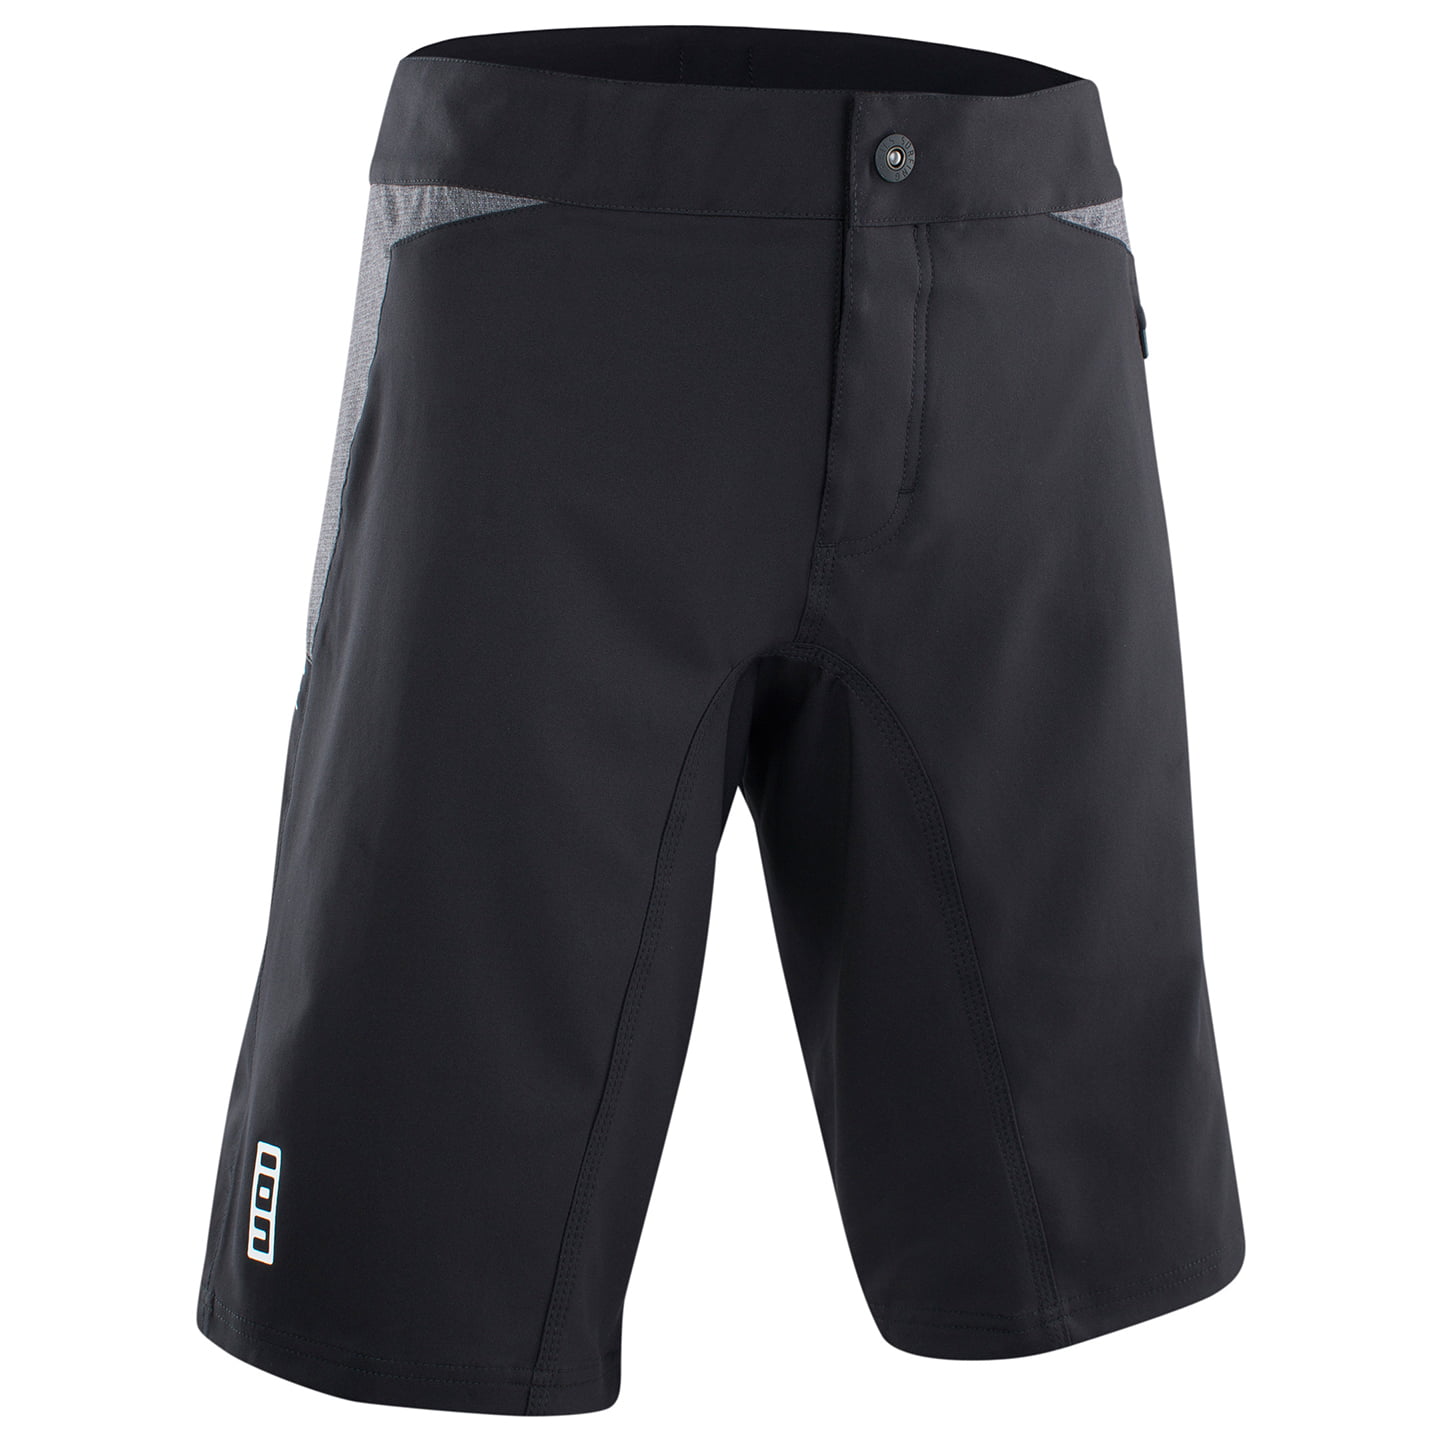 ION Traze w/o Pad Bike Shorts, for men, size M, MTB shorts, MTB clothing